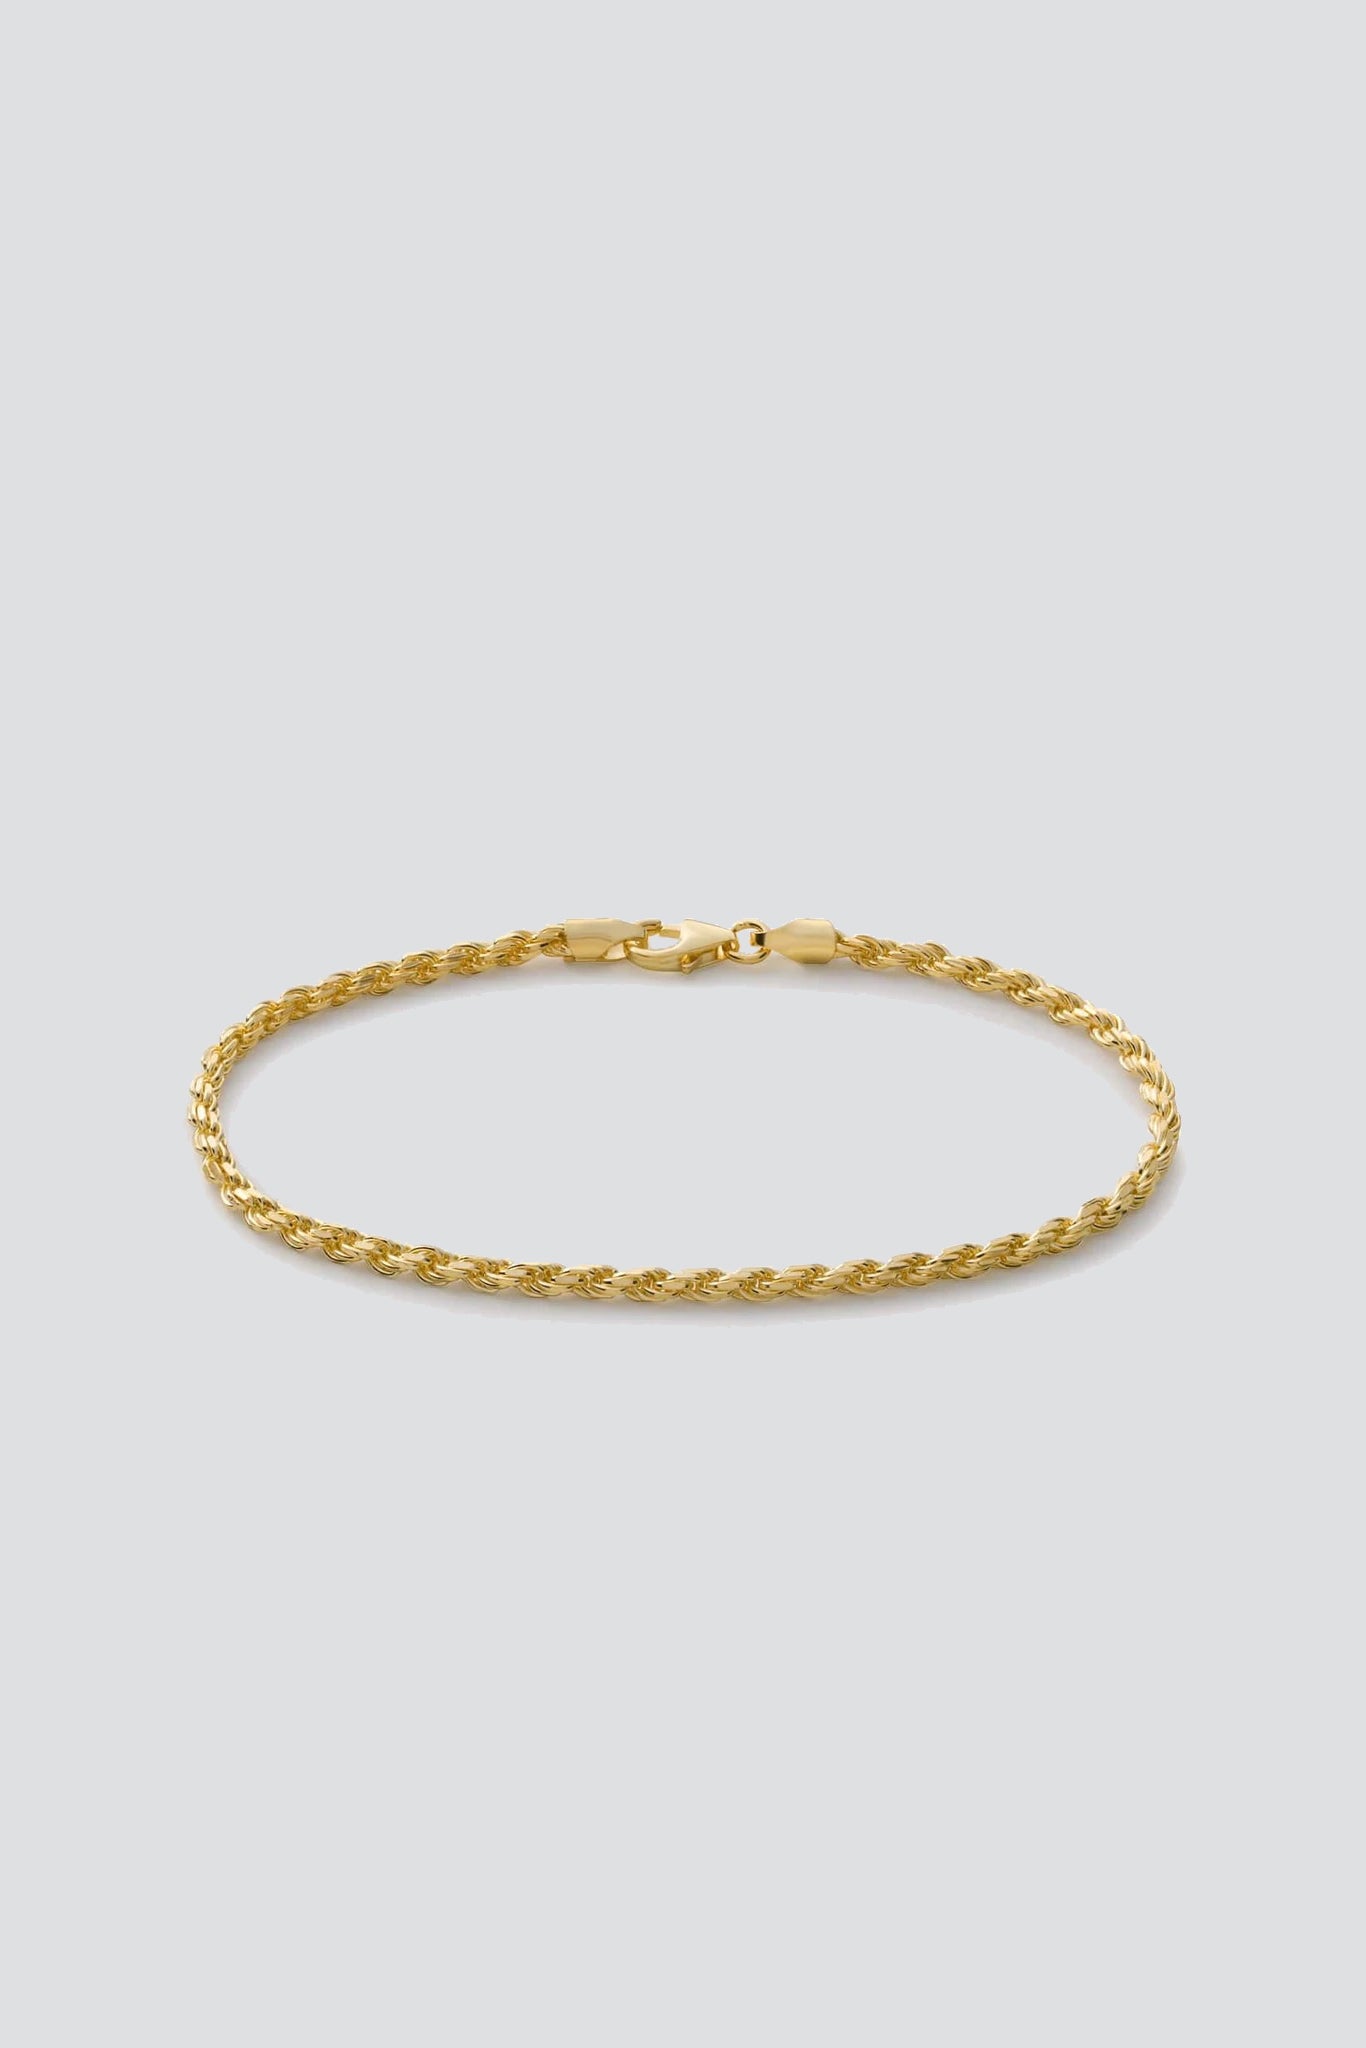 Gold Vermeil 2.4mm Rope Chain Bracelet